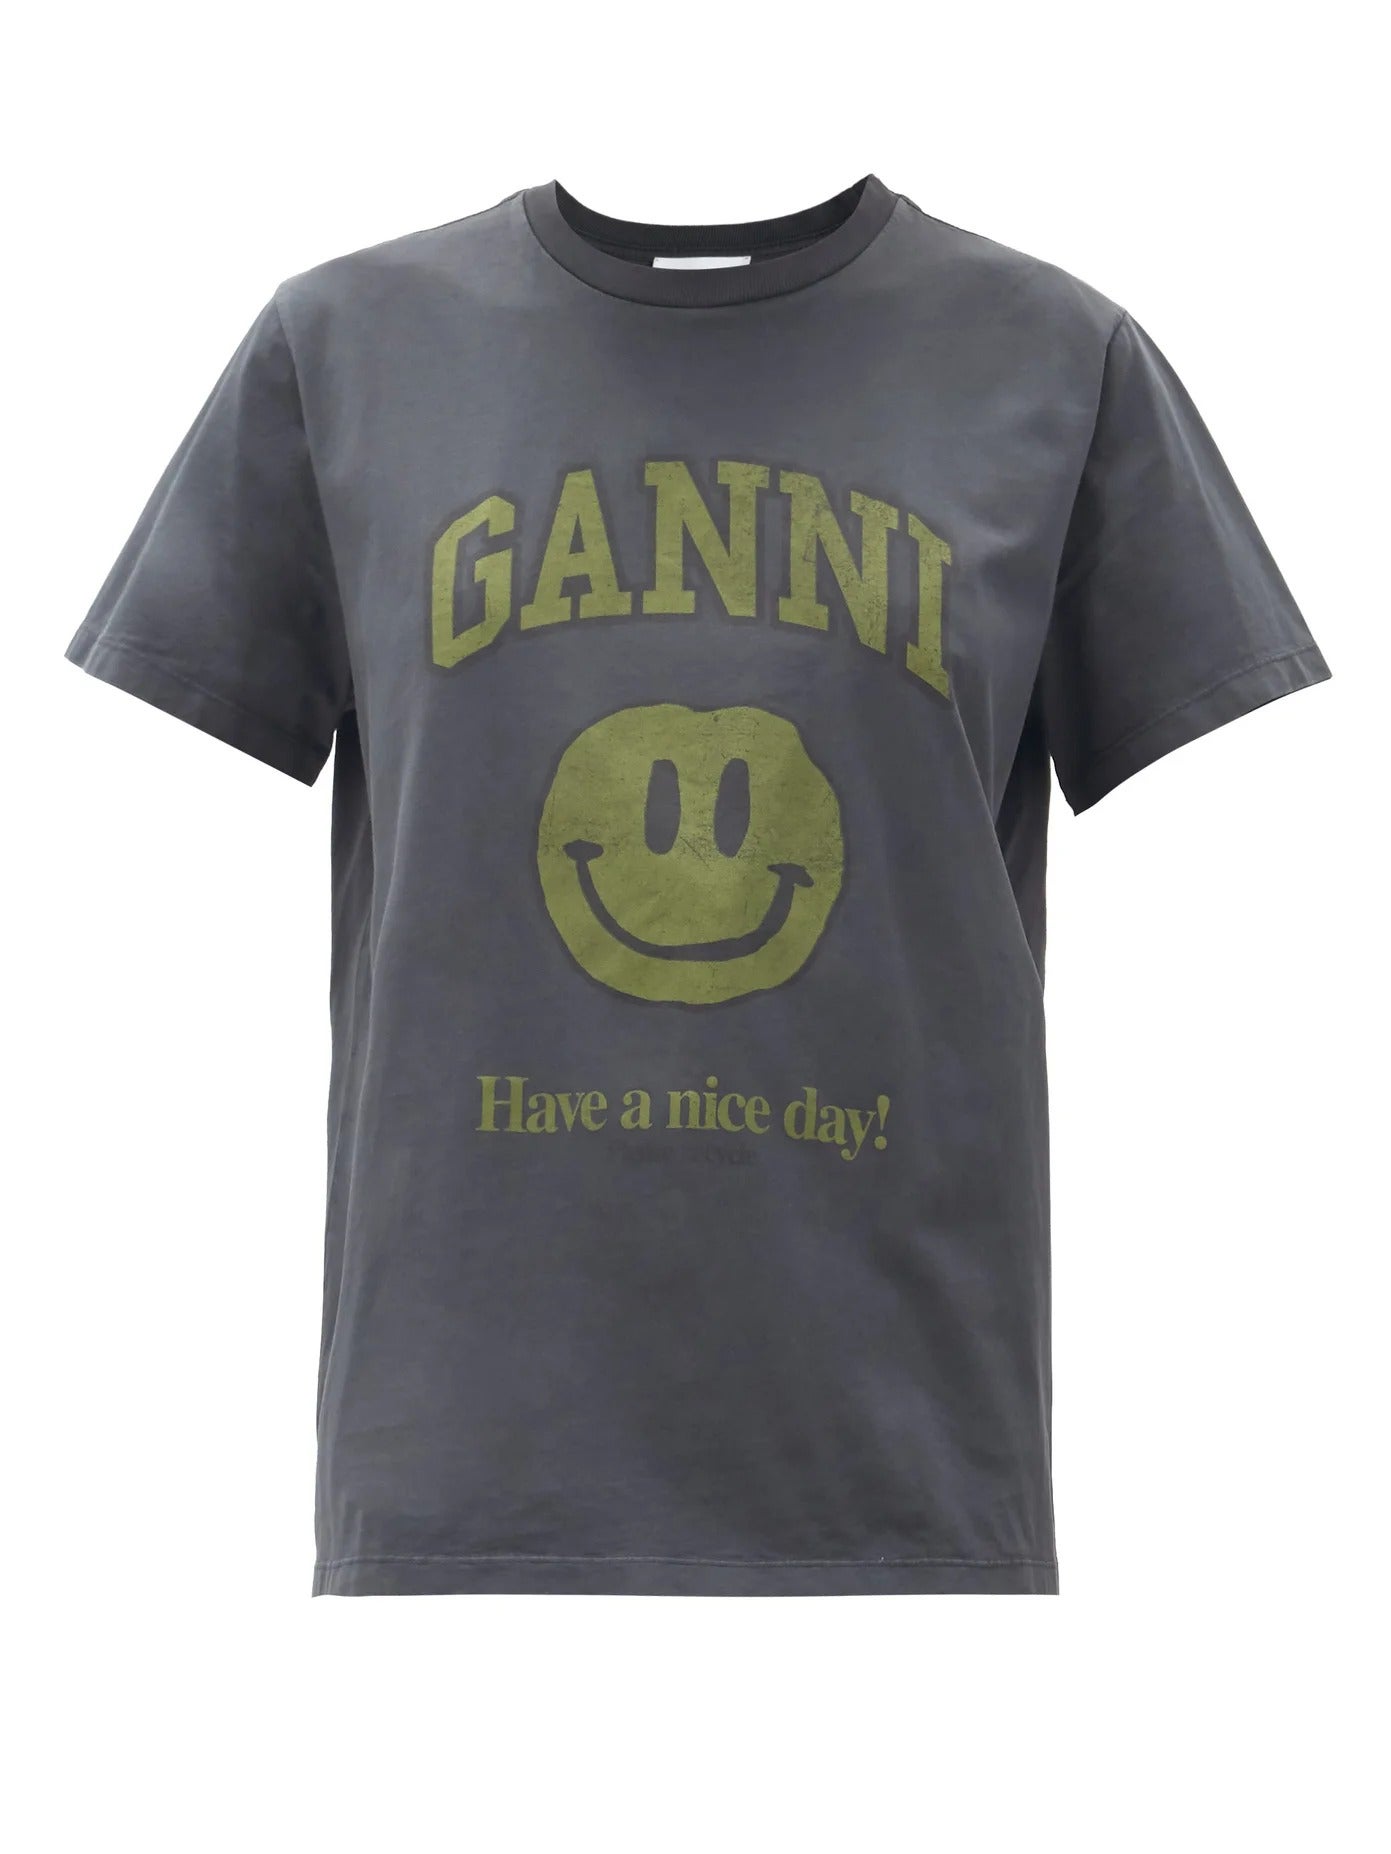 Ganni + Smiling Face Jersey T-Shirt